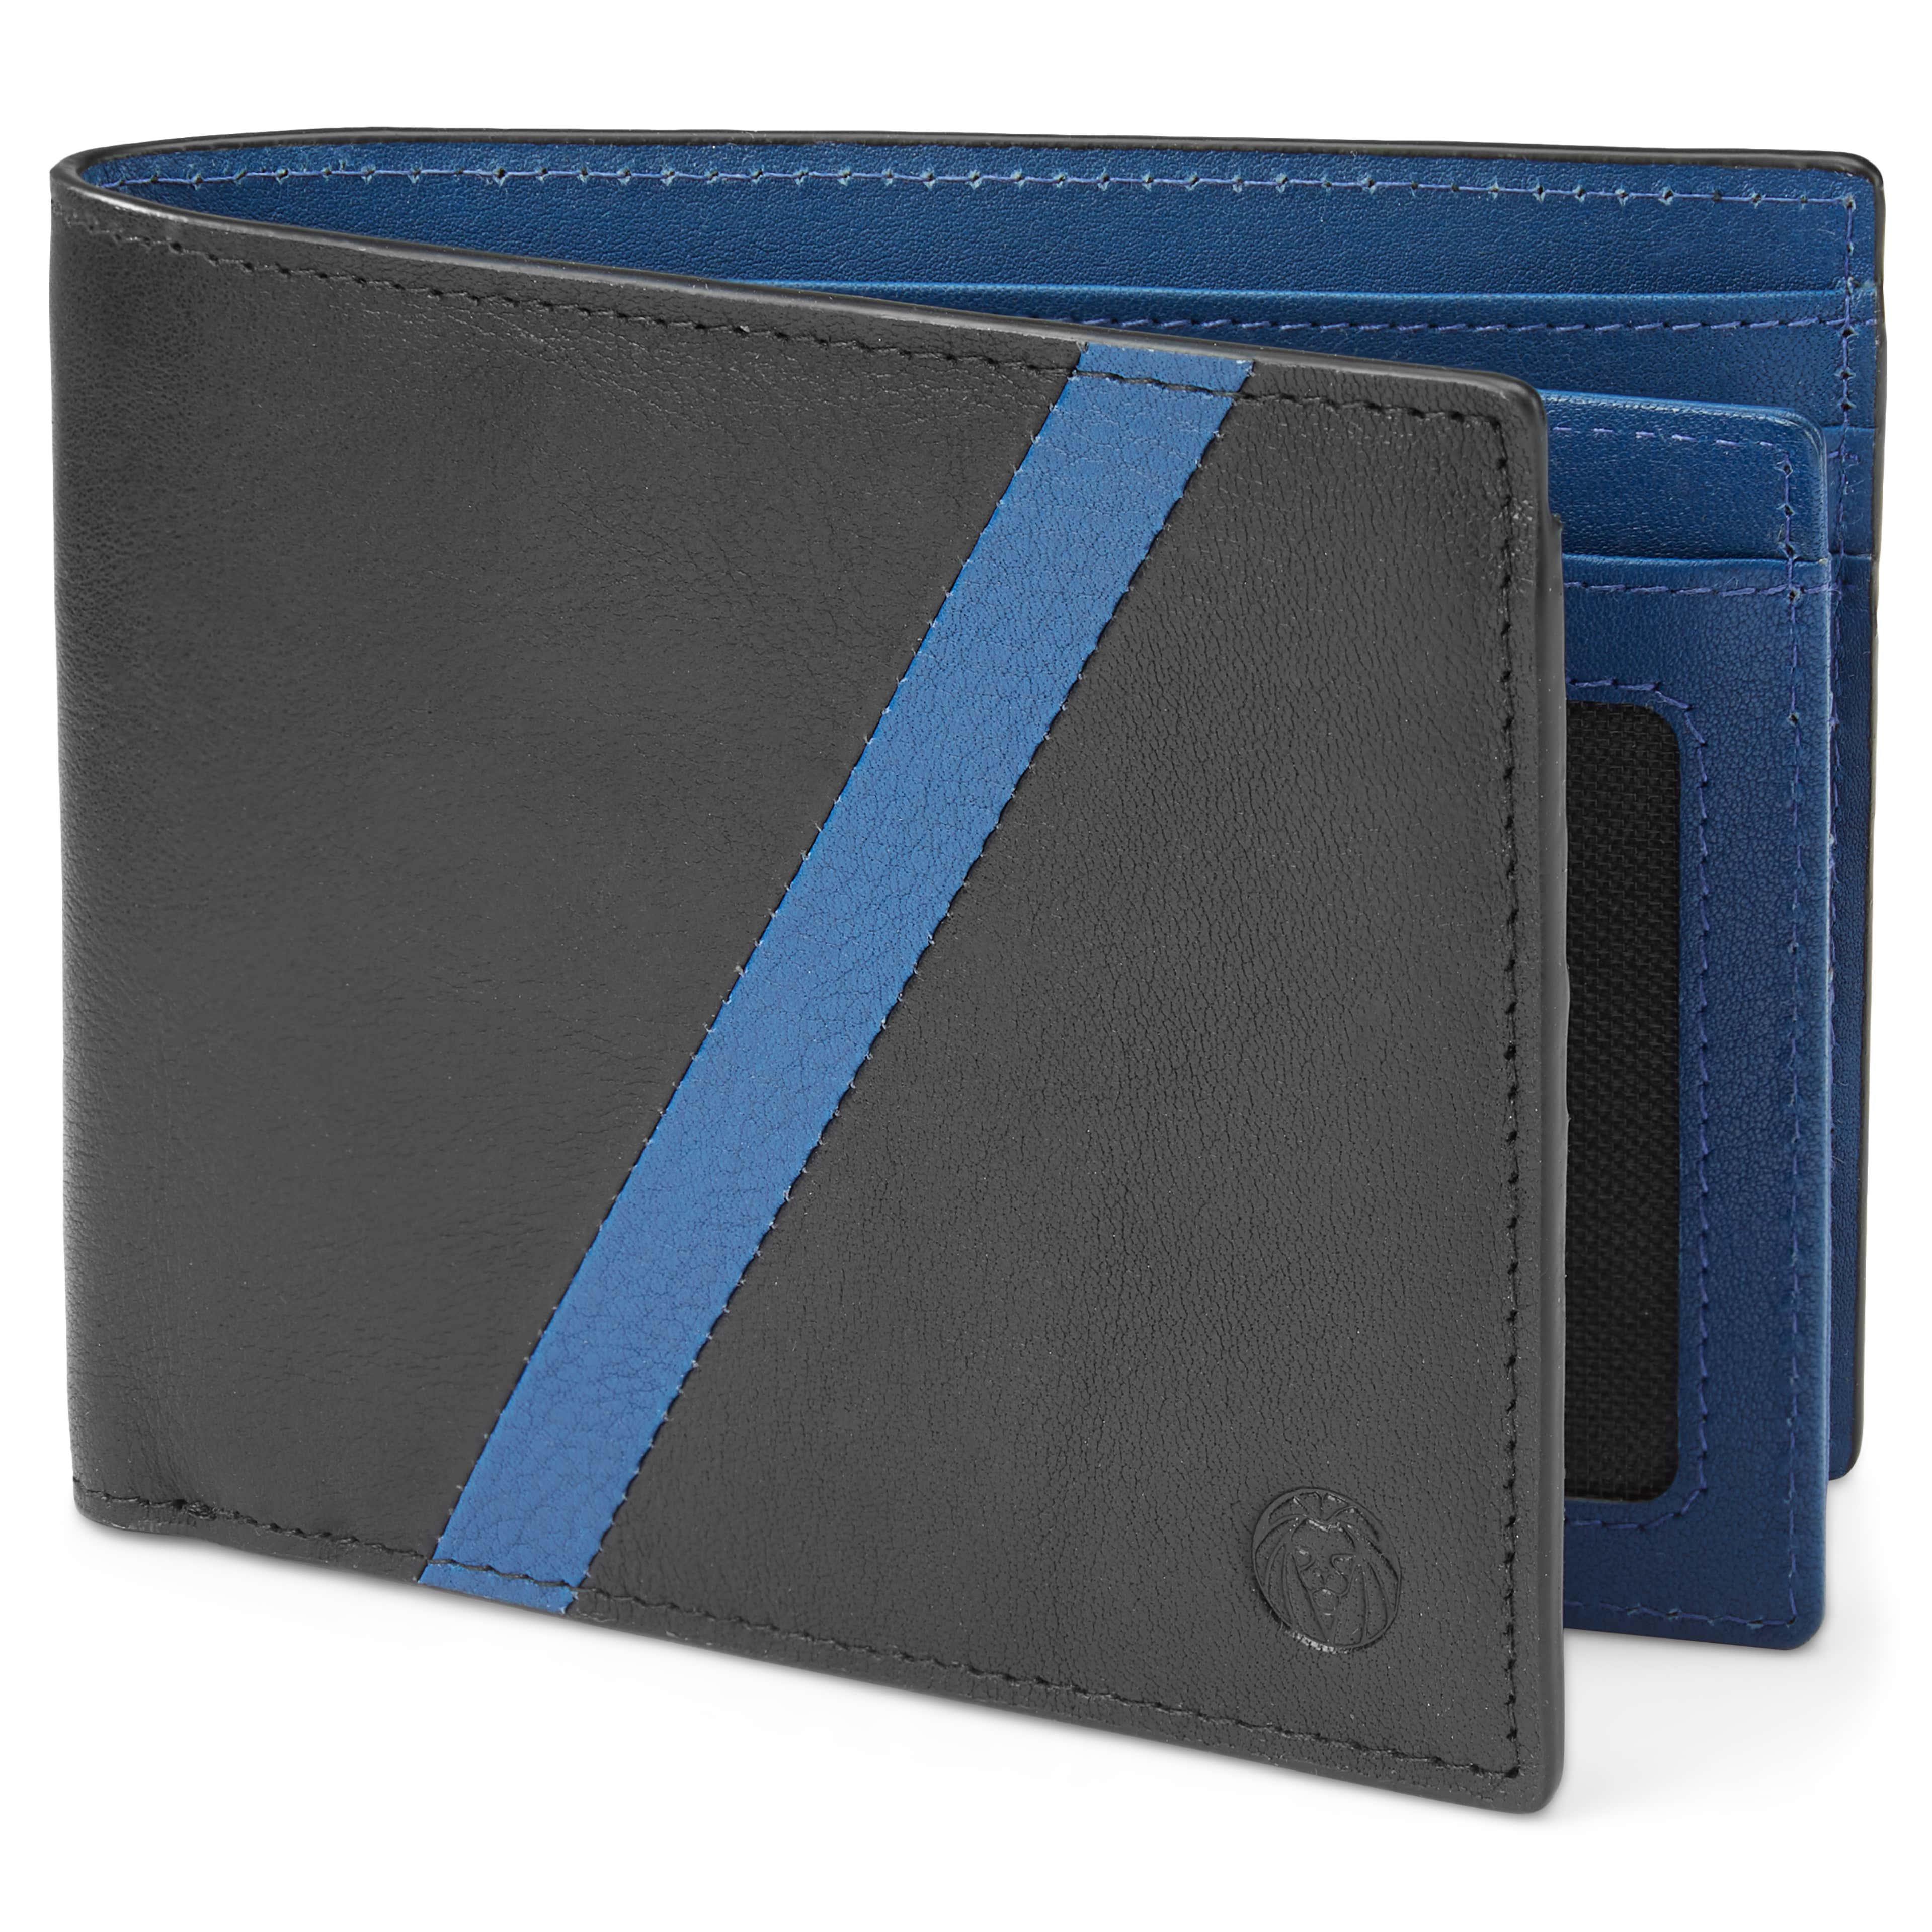 Lind Black & Blue Leather RFID-Blocking Wallet